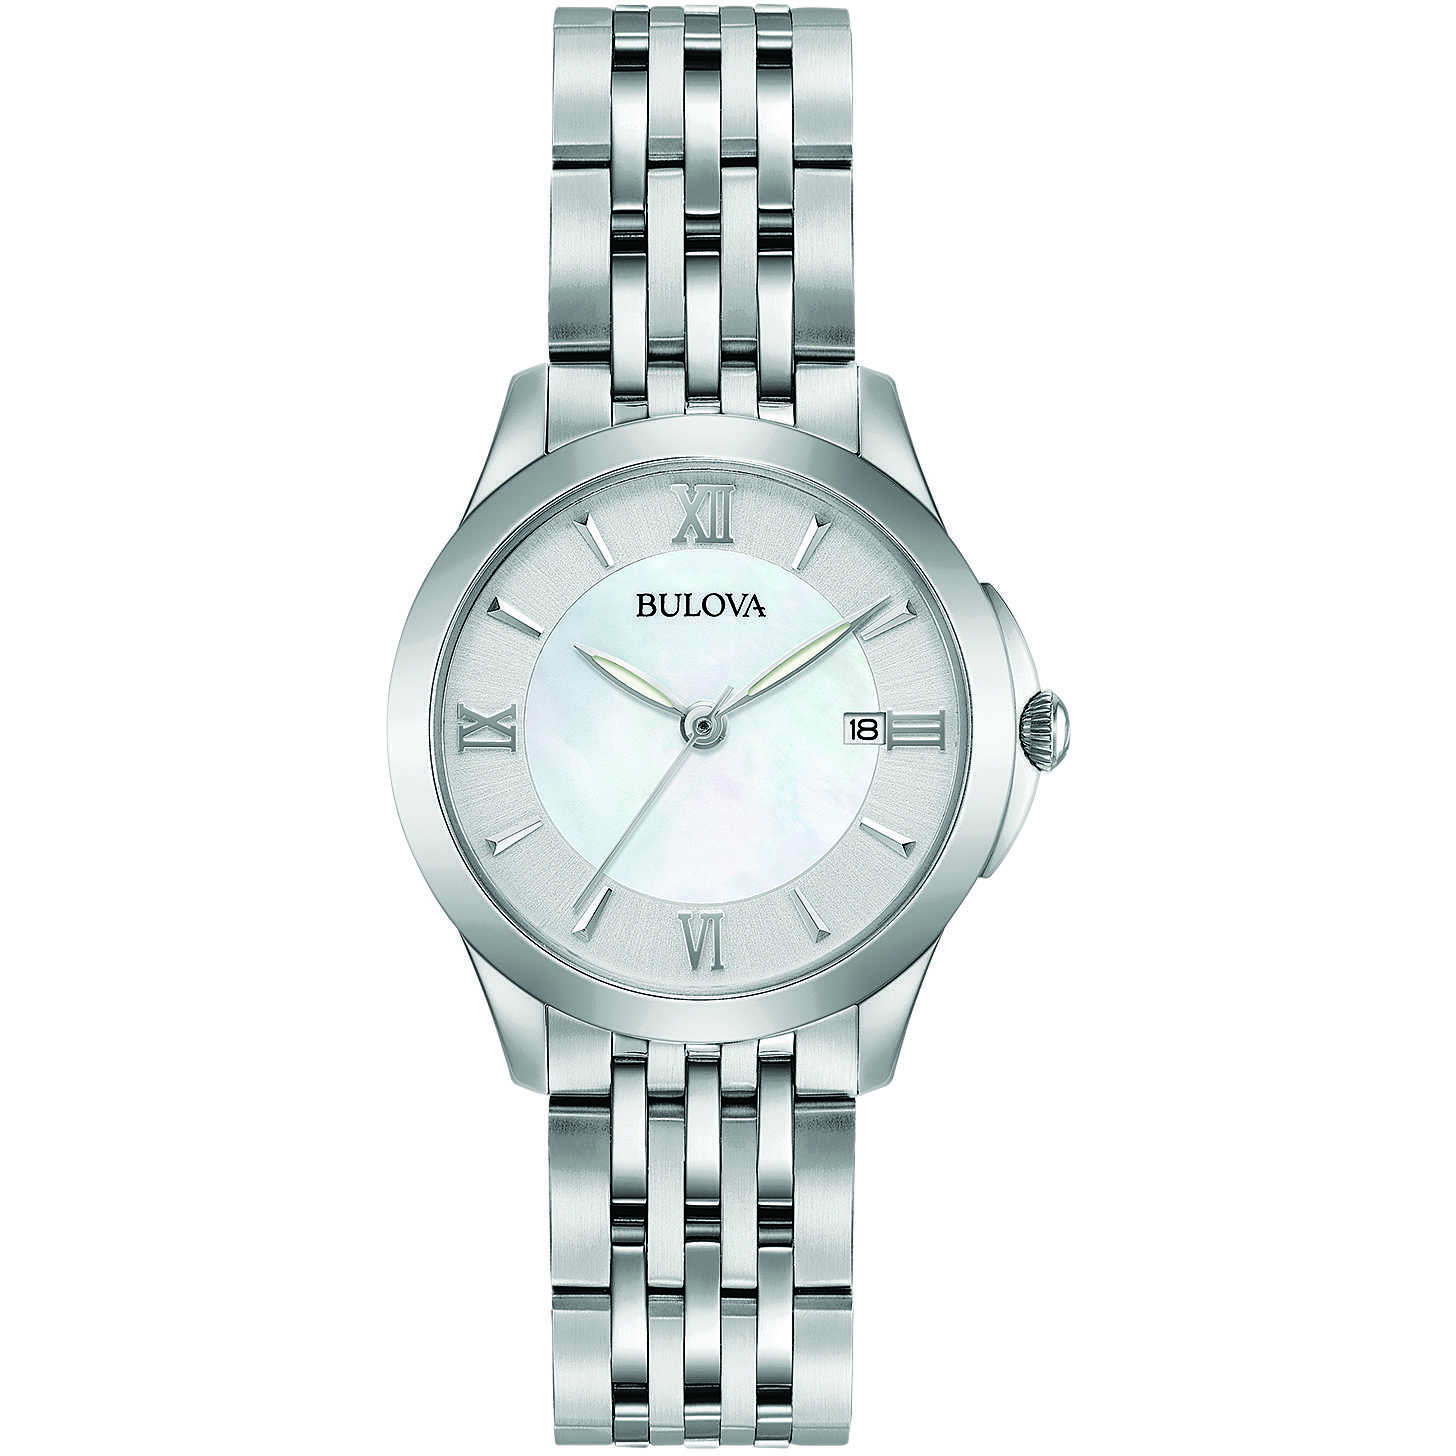 Bulova Classic Women's Time-Only Watch